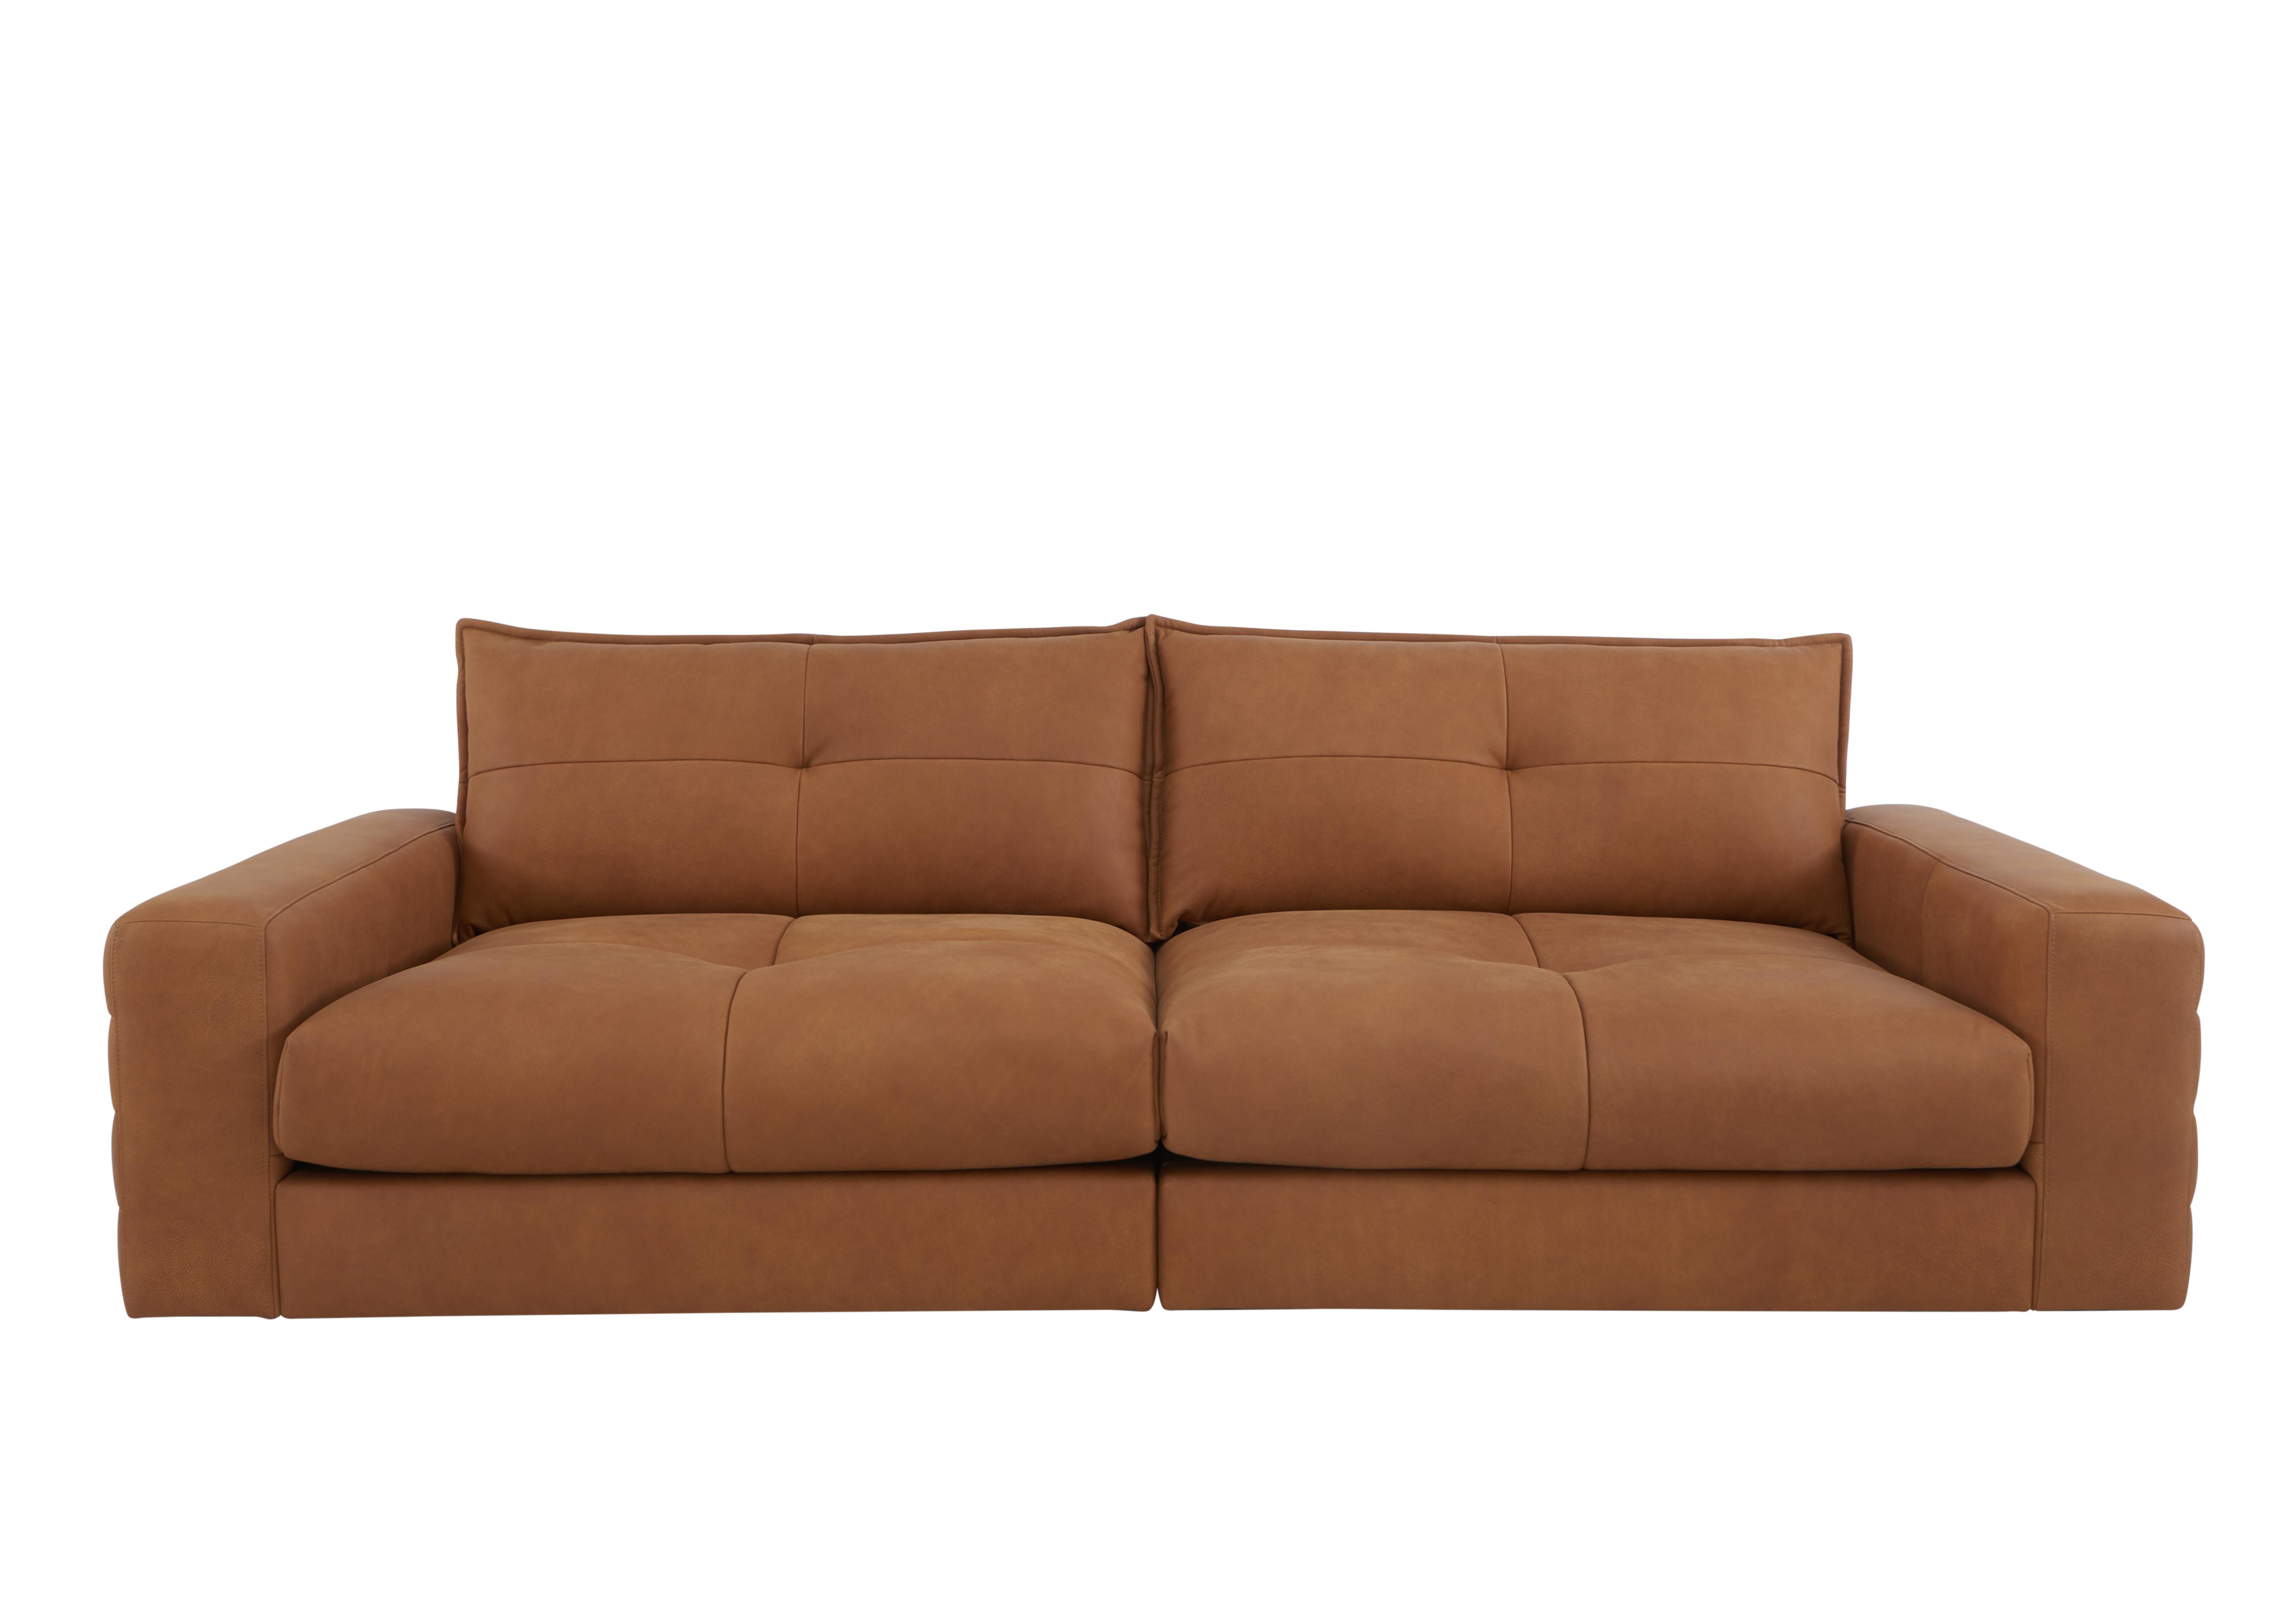 Boutique Brando 4 Seater Split Leather Sofa in Stone Washed Tan on Furniture Village